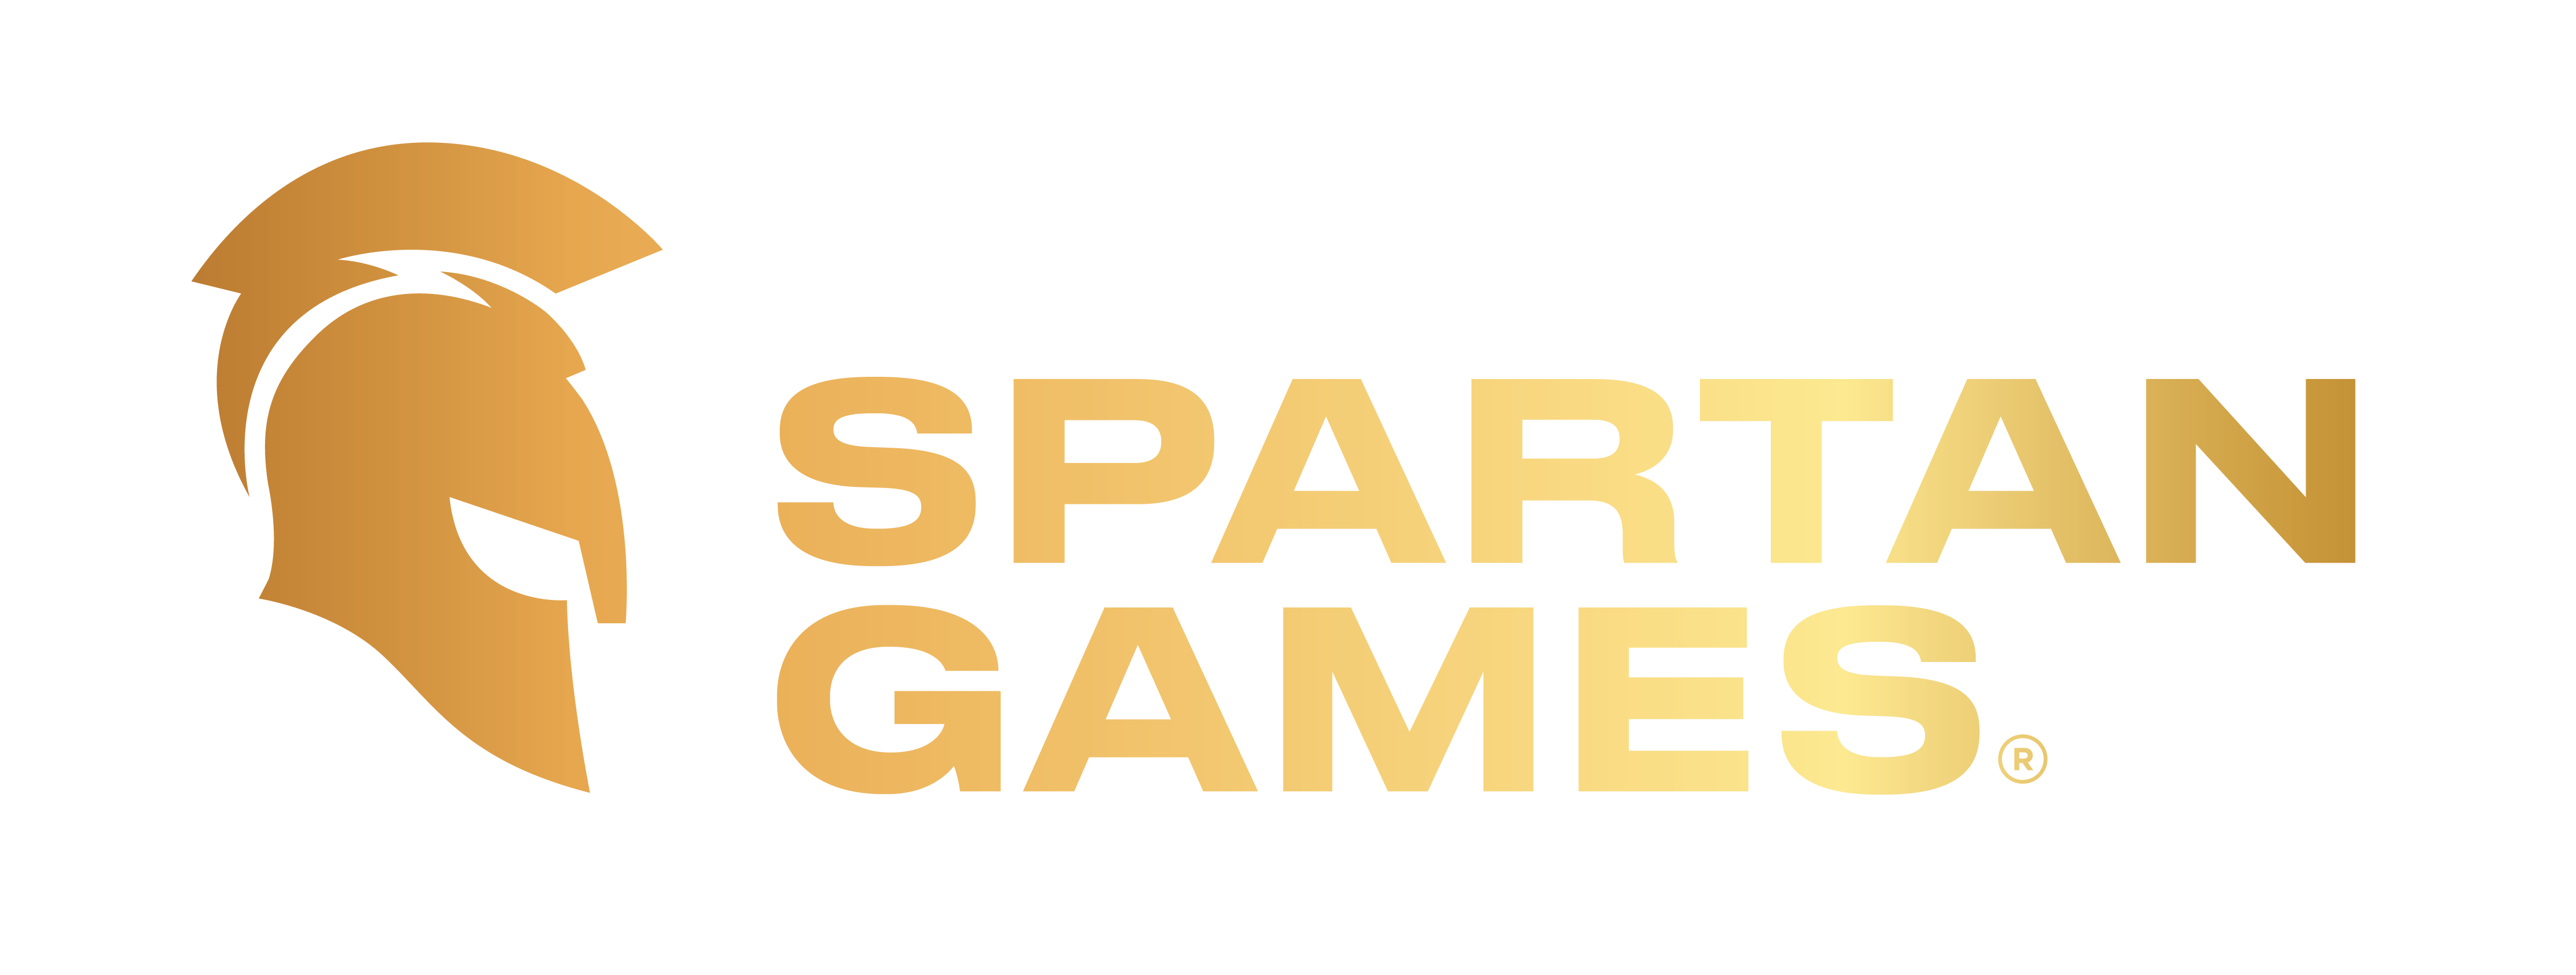 Spartan Games